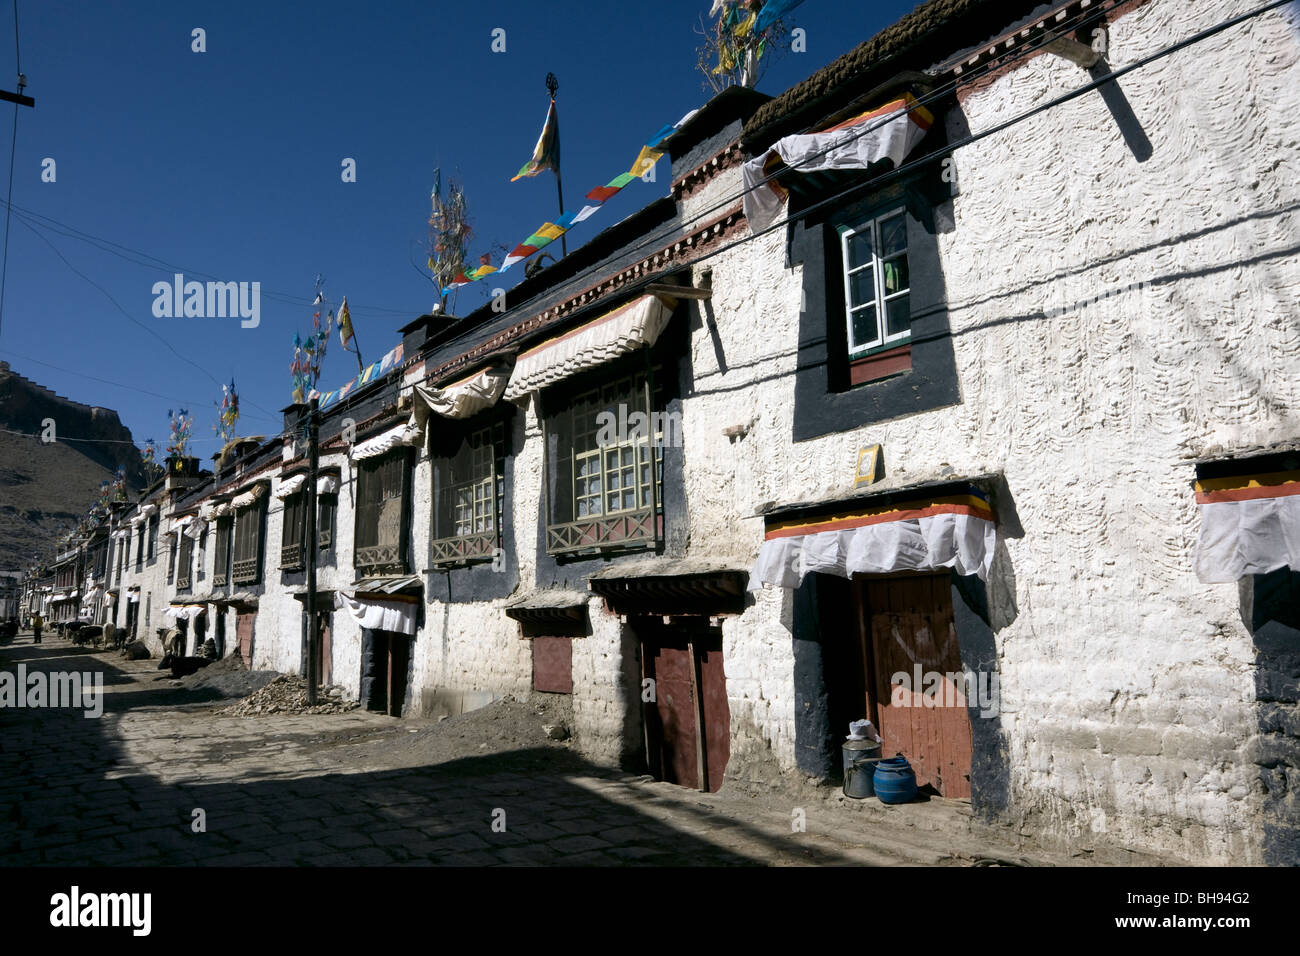 street scene in the traditional village tibetan quarter of gyantse tibet china Stock Photo